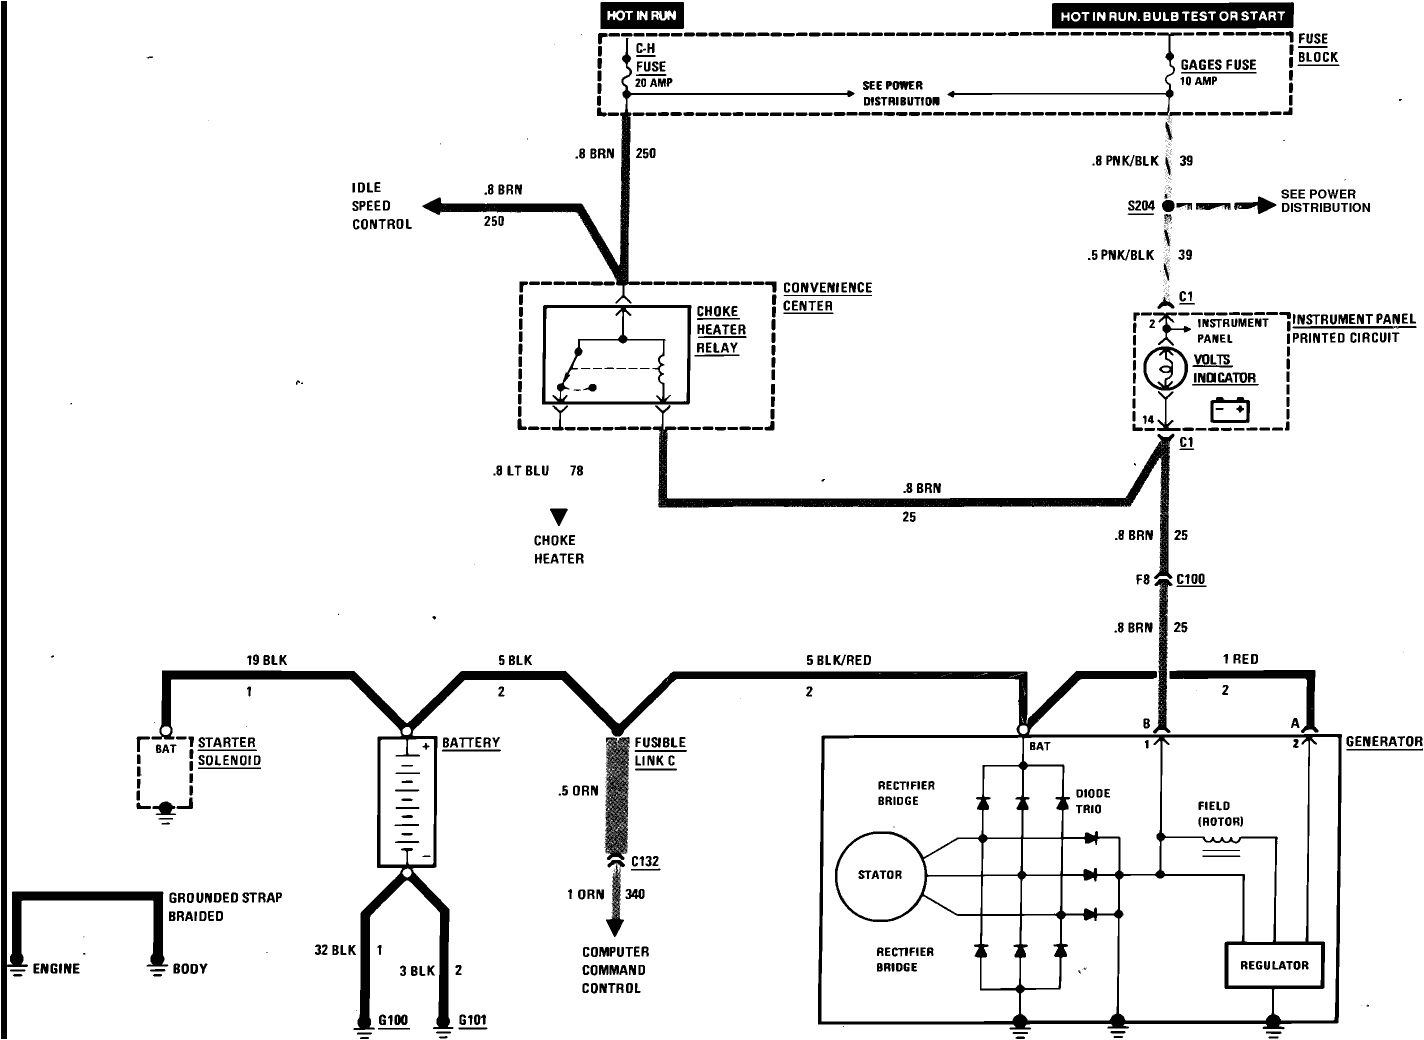 gm external voltage regulator wiring diagram